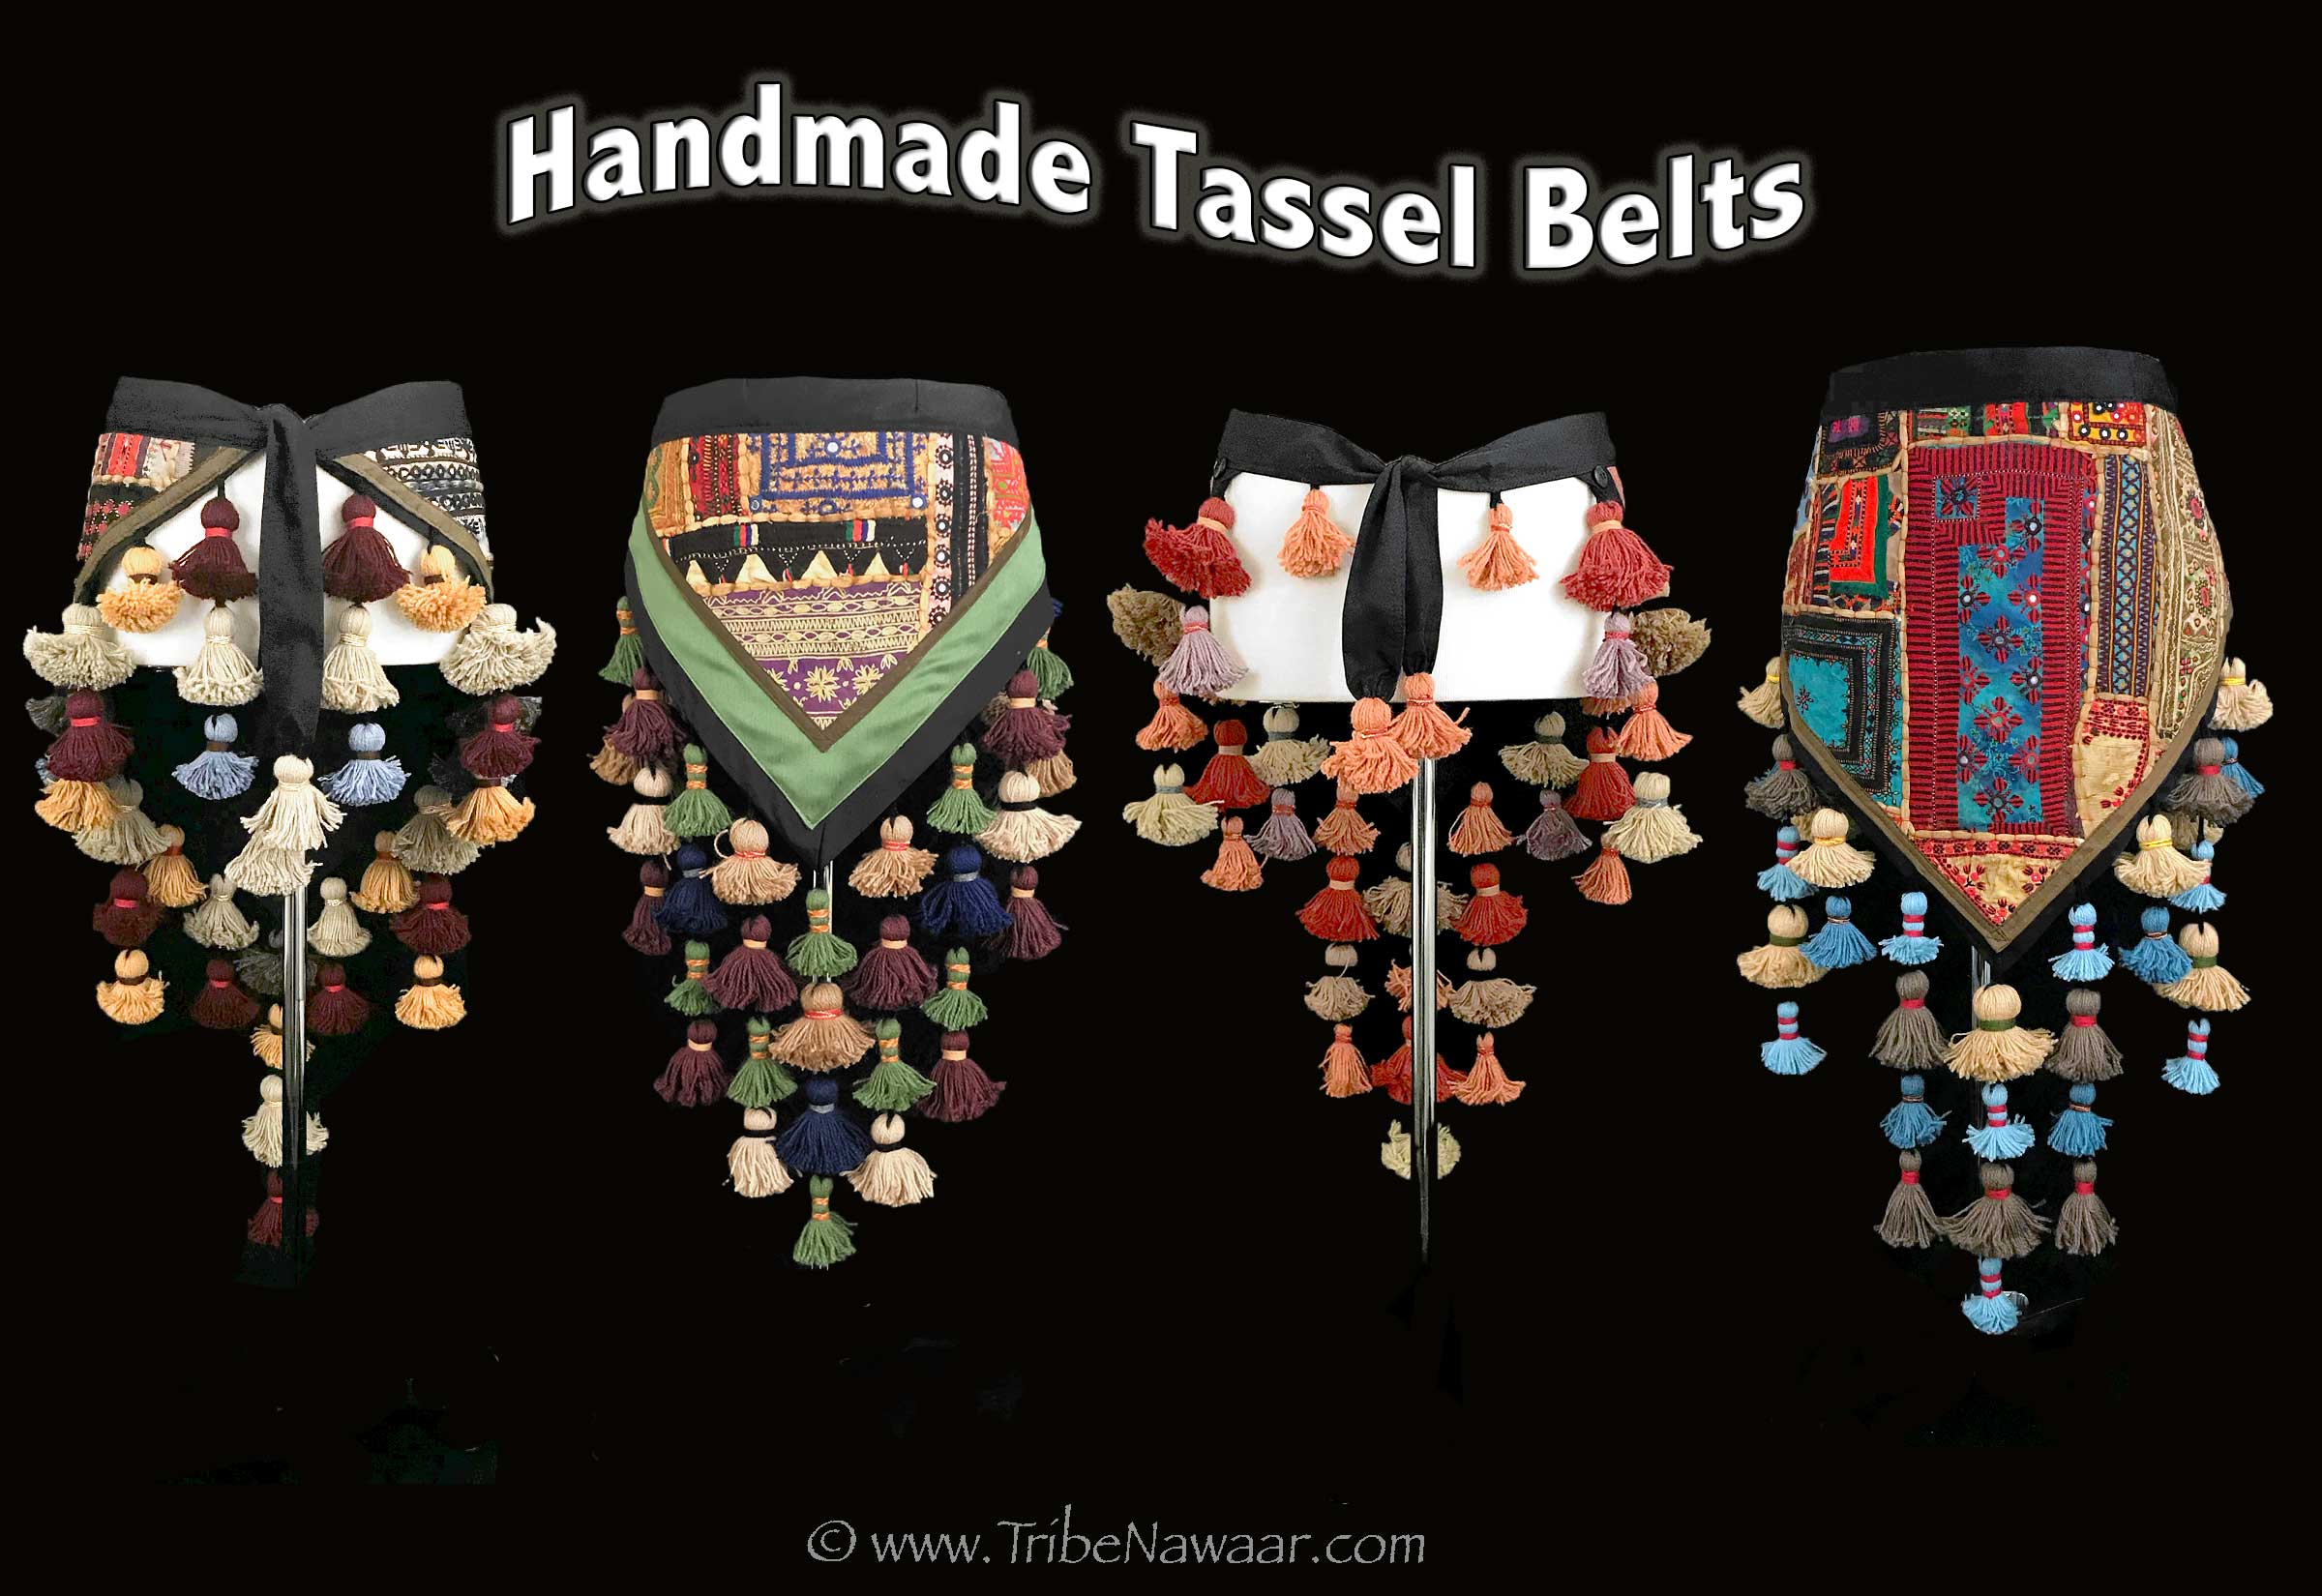 Handmade tassel belts from Tribe Nawaar